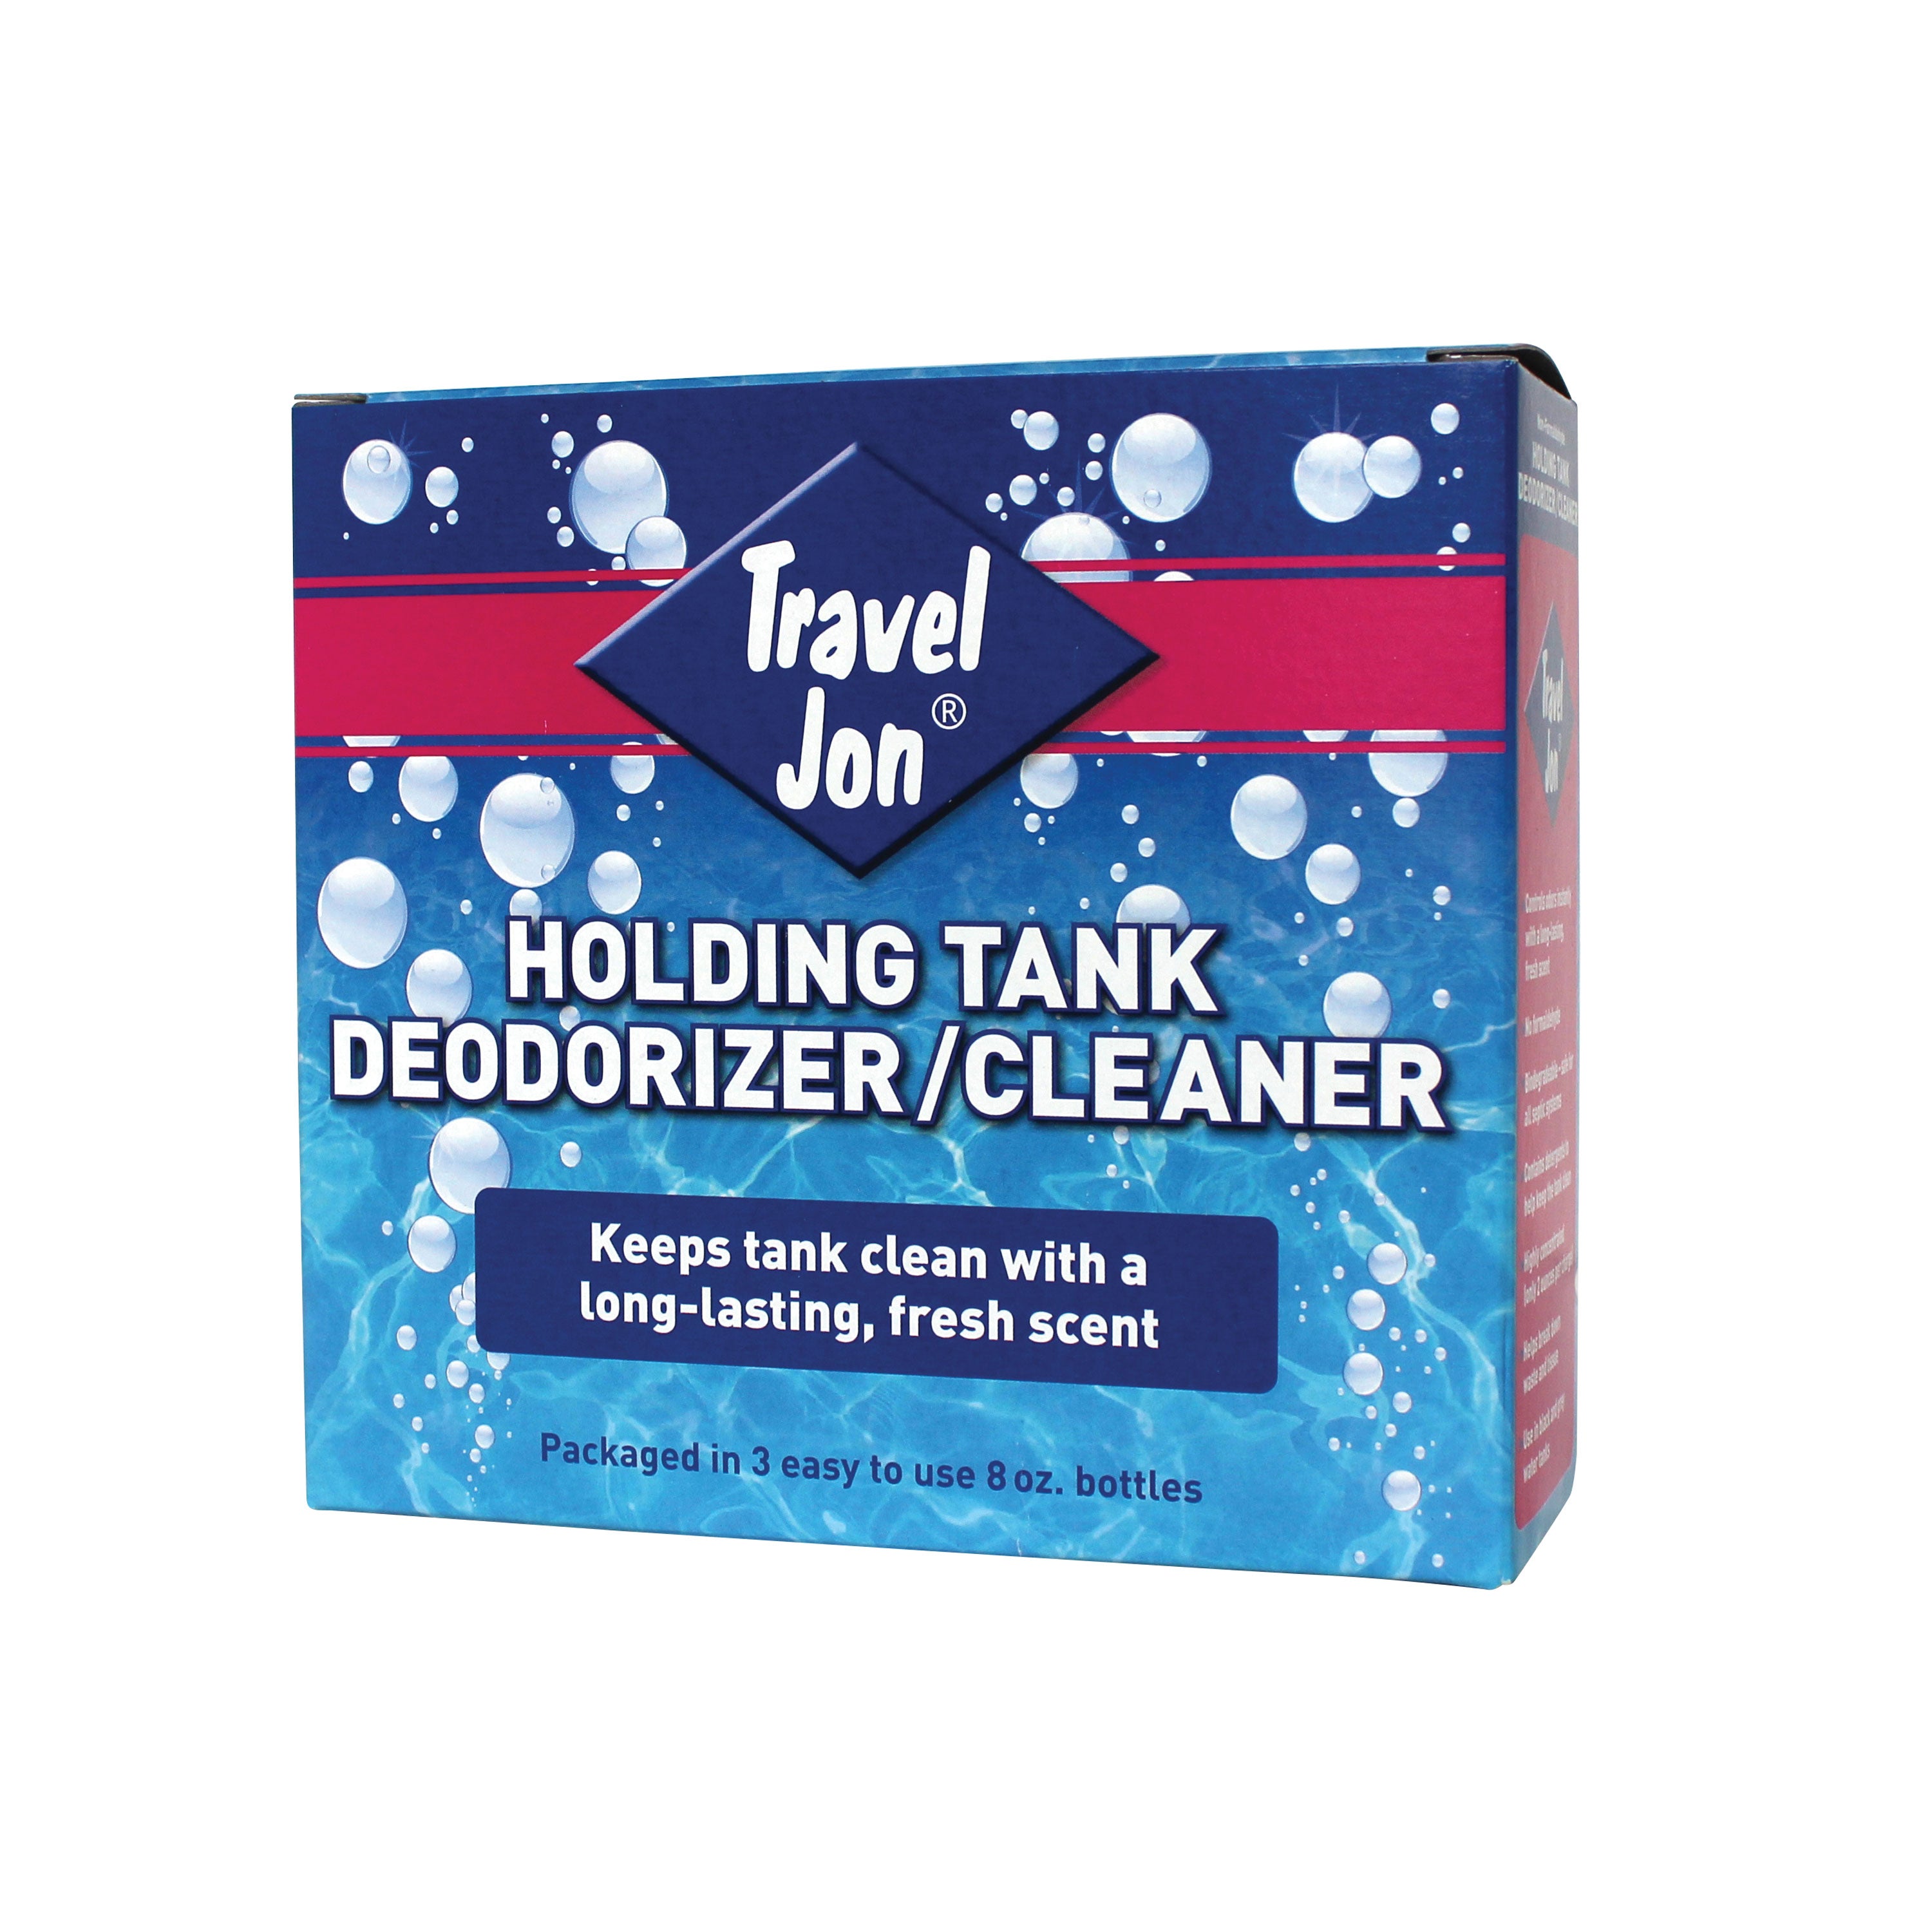 Century Chemical 20051-8Z Travel Jon Holding Tank Deodorizer/Cleaner - 8 oz., 3 Pack